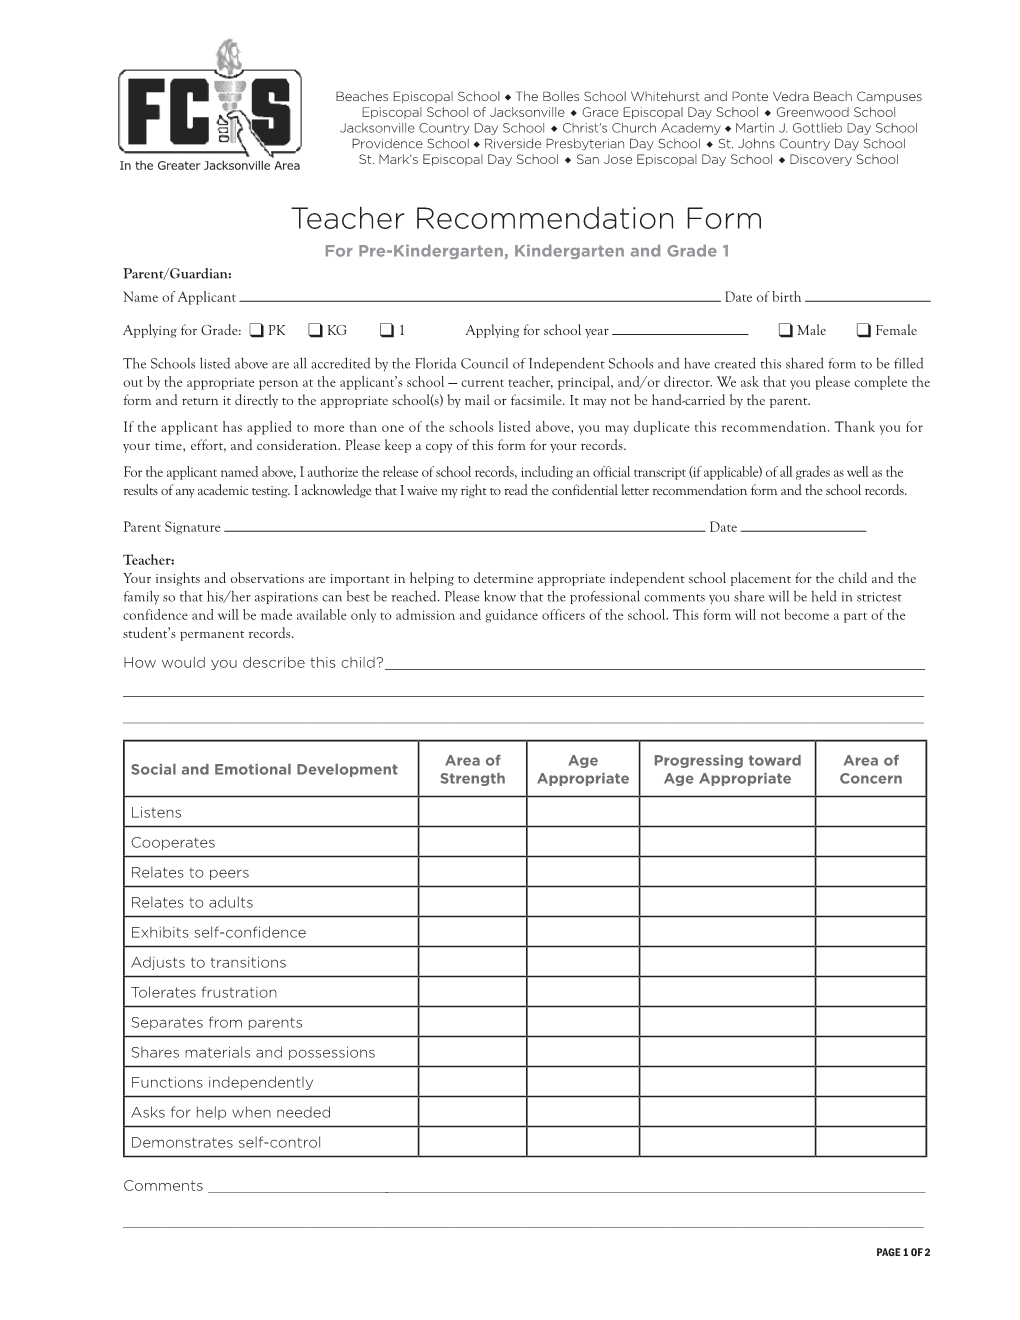 Teacher Recommendation Form for Pre-Kindergarten, Kindergarten and Grade 1 Parent/Guardian: Name of Applicant Date of Birth